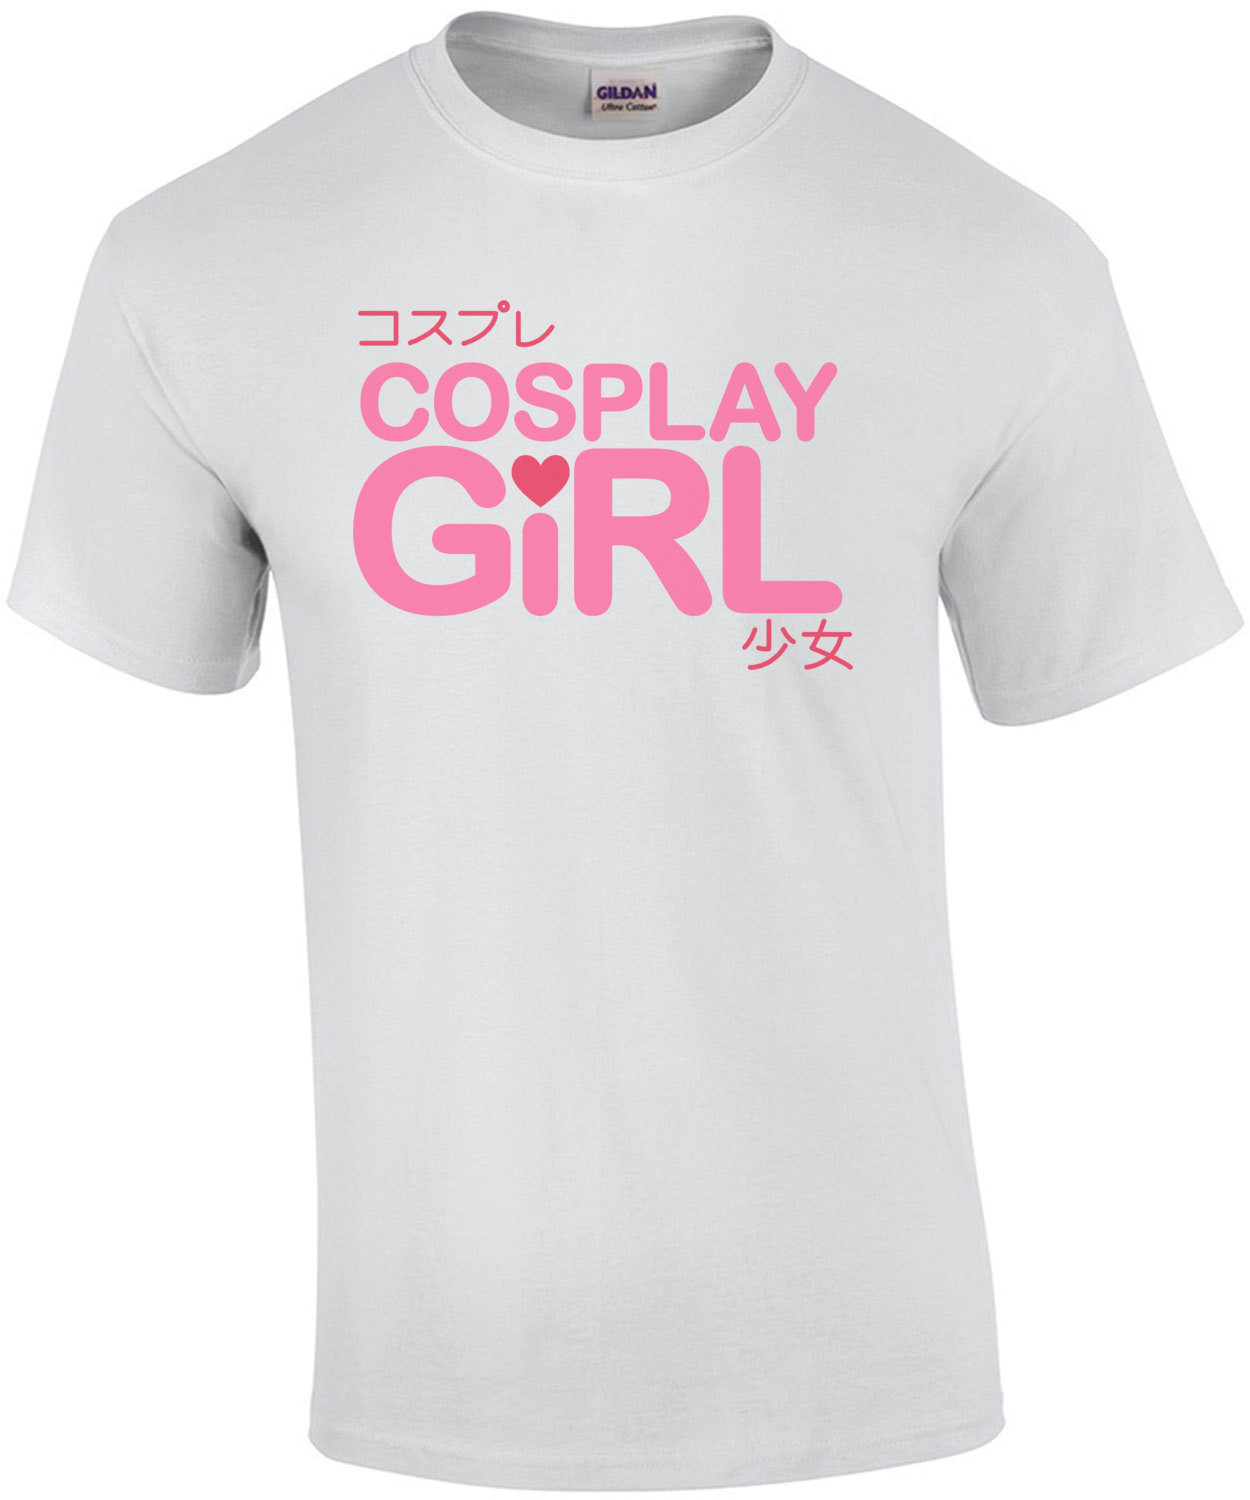 Cosplay Girl T-Shirt